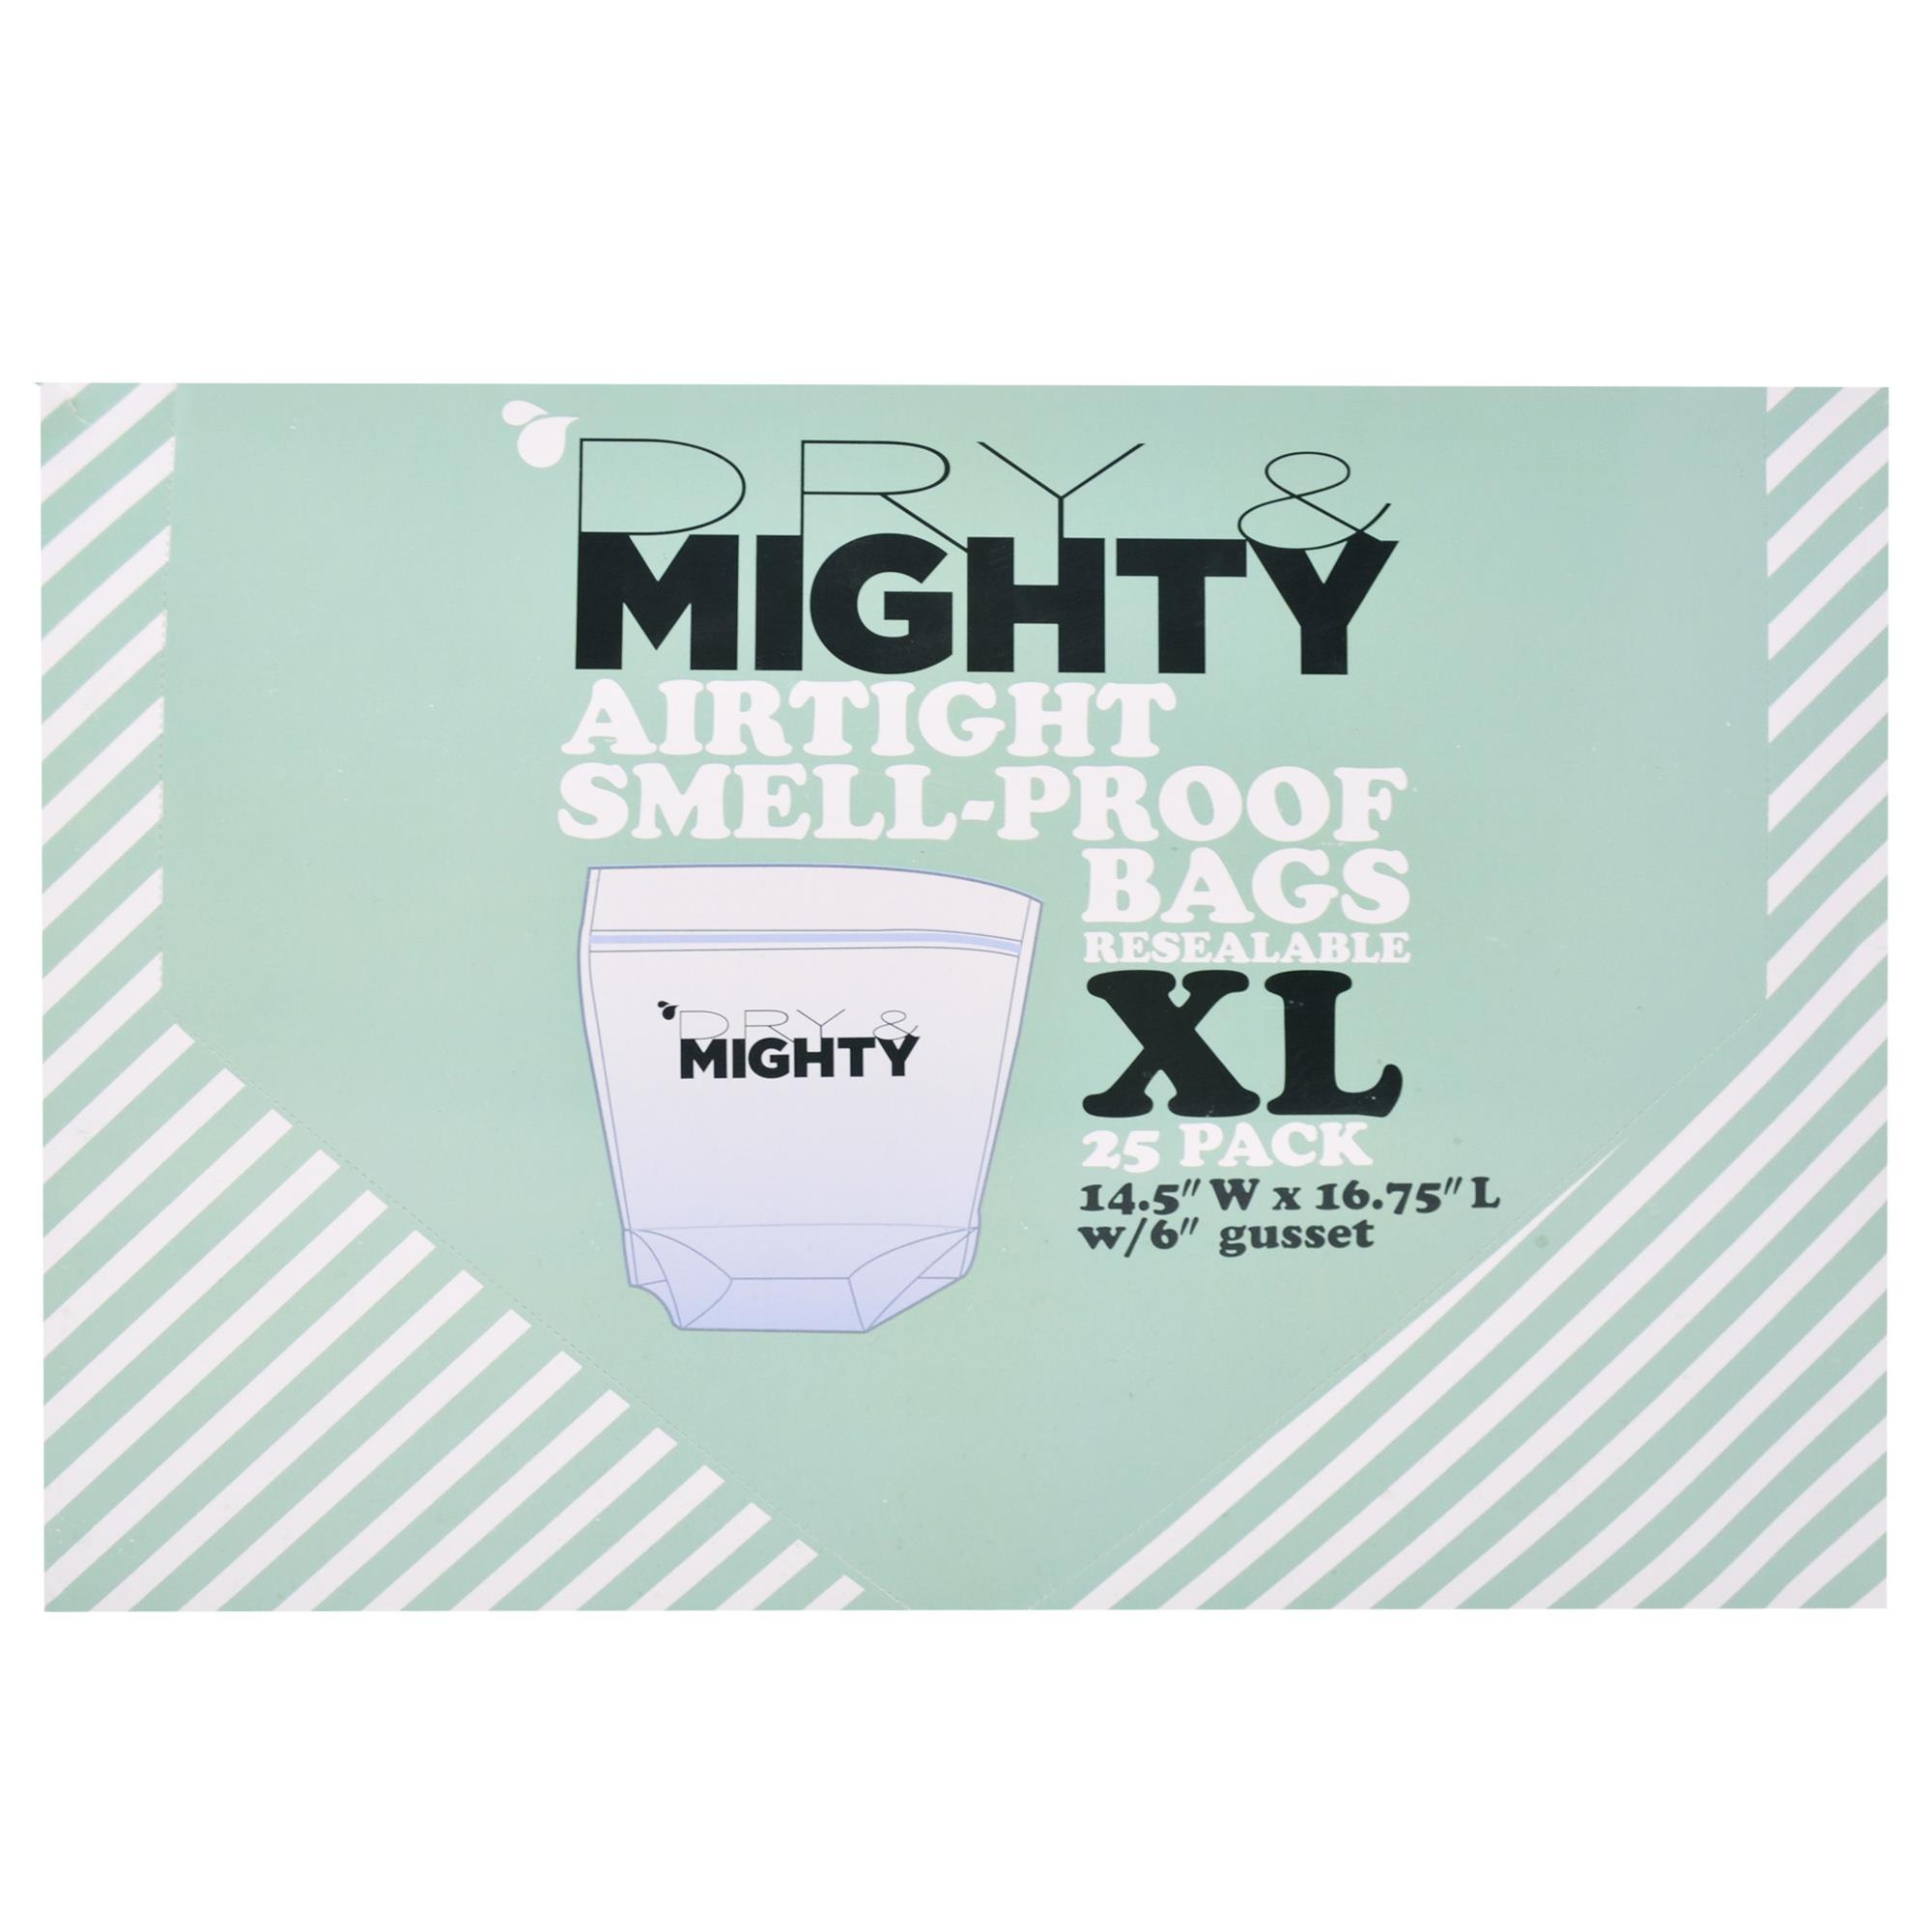 DRY & MIGHTY XL ZIPLOCK BAGS